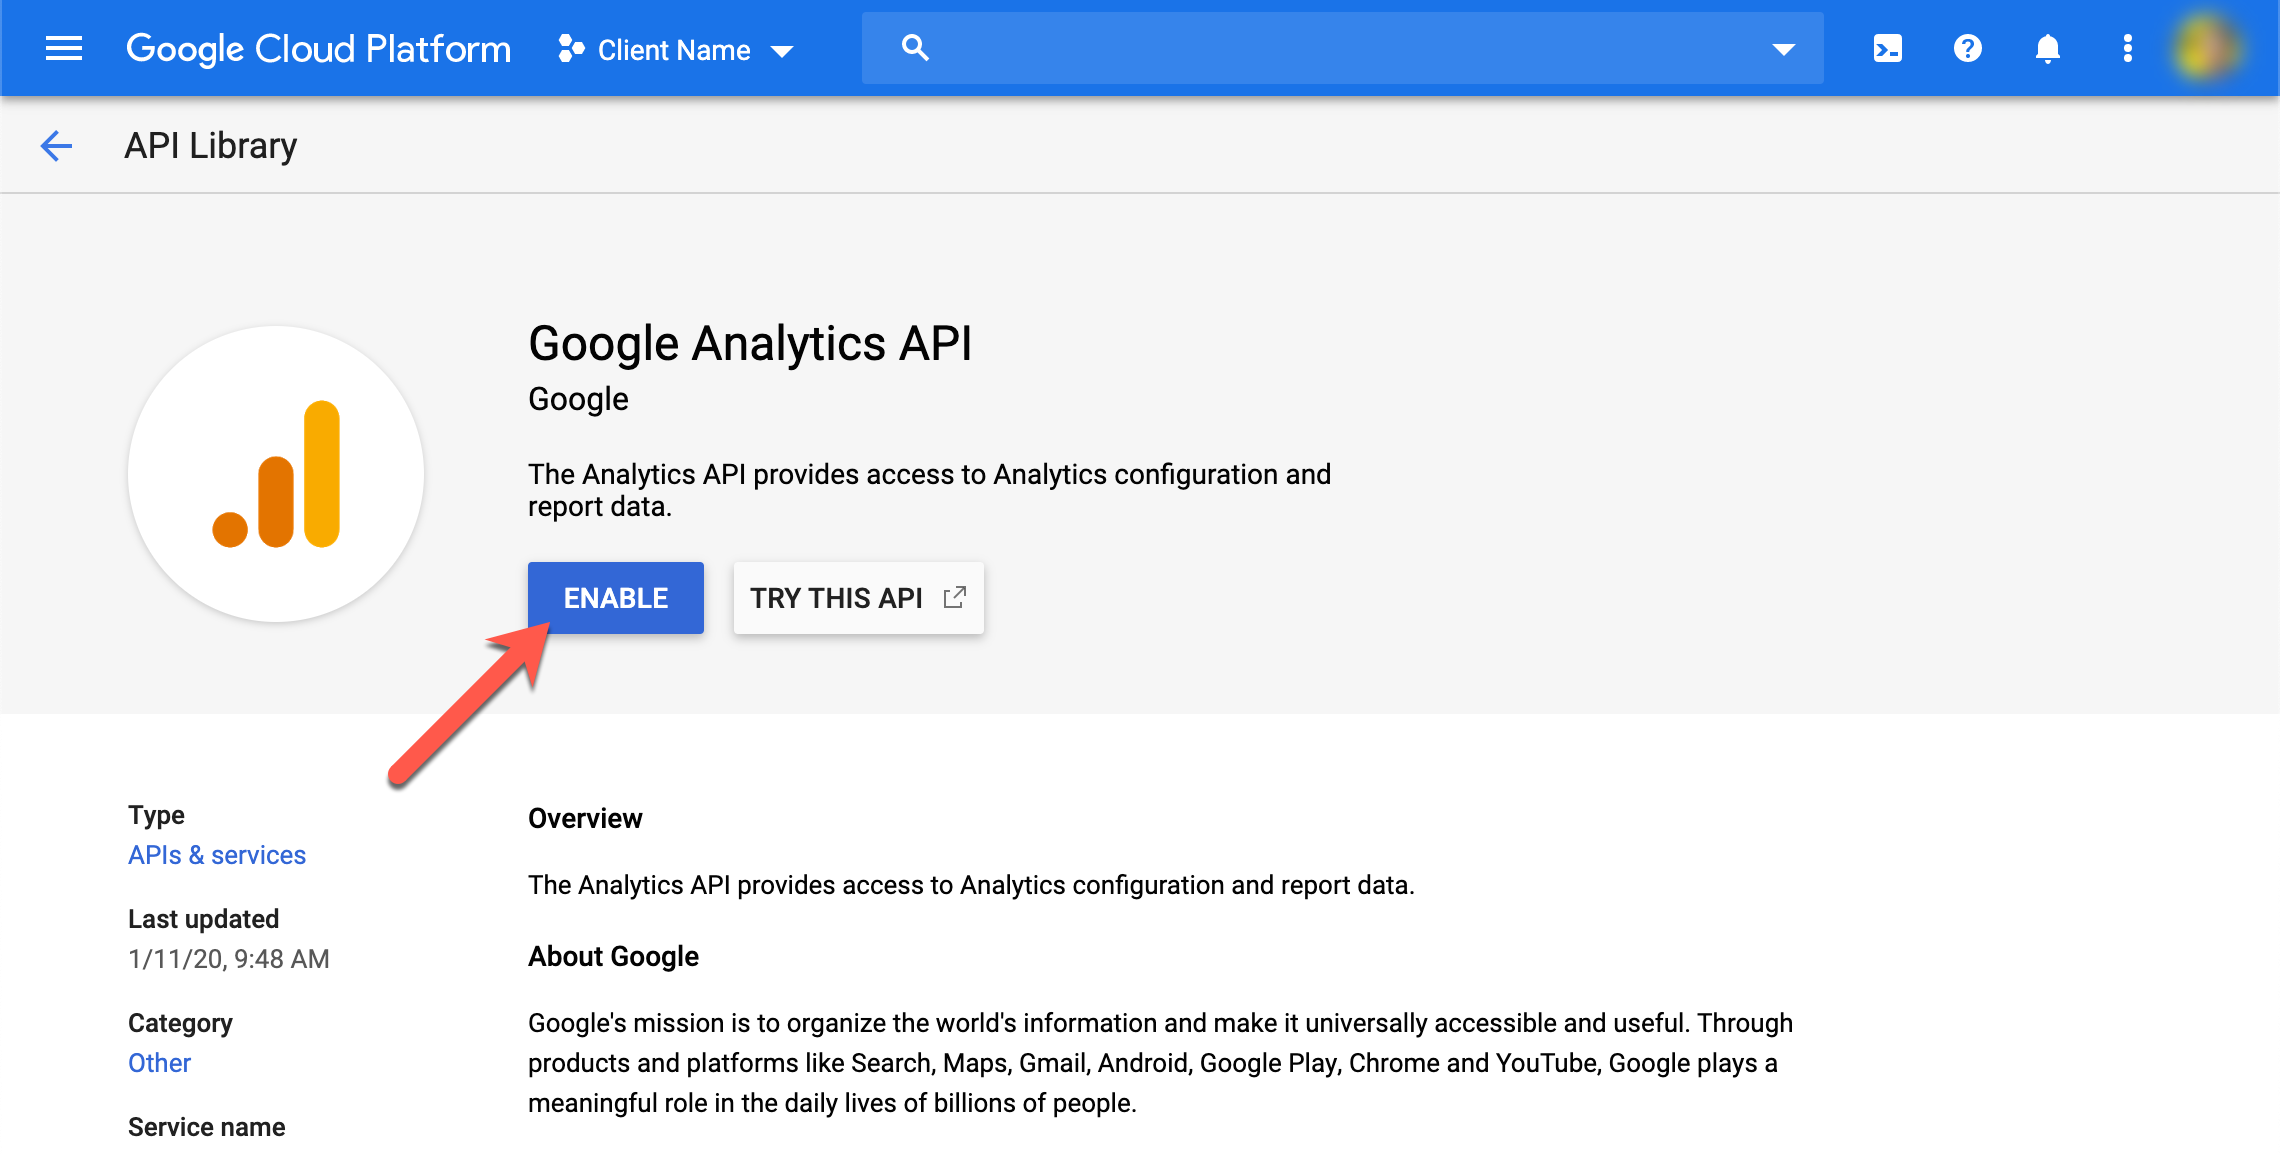 Enable Google Analytics API